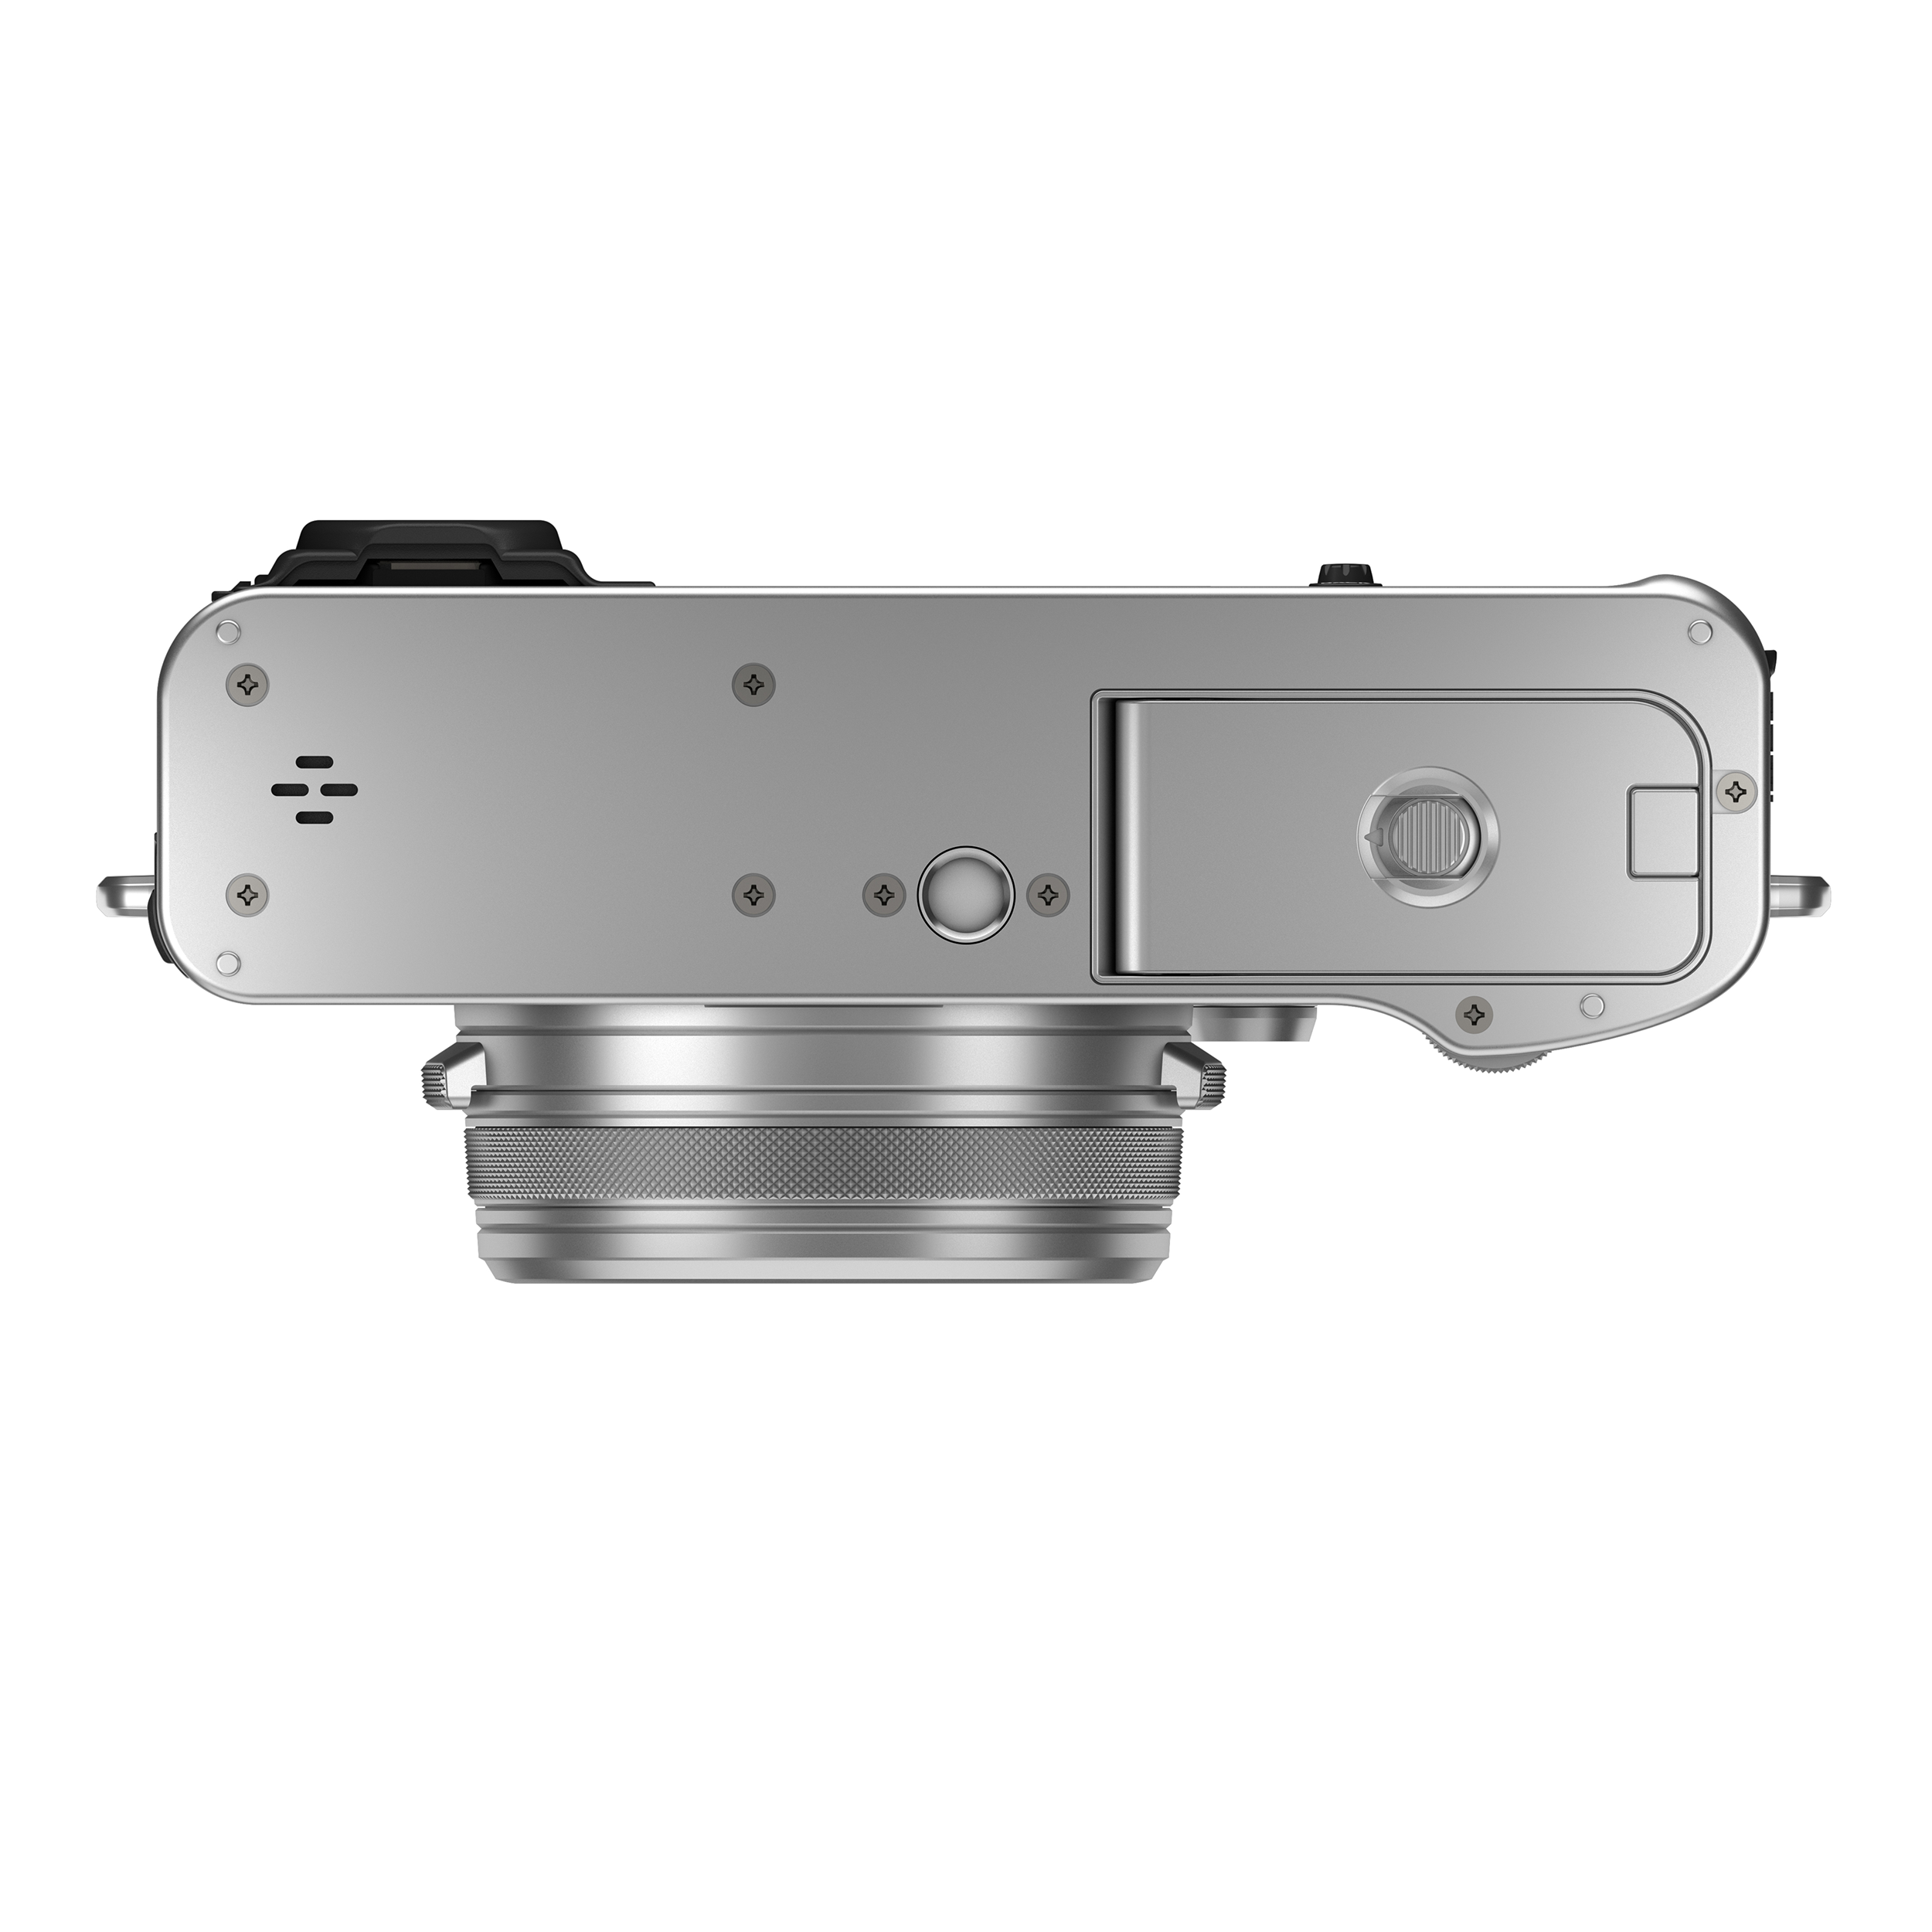 Caméra numérique Fujifilm X100VI - Silver